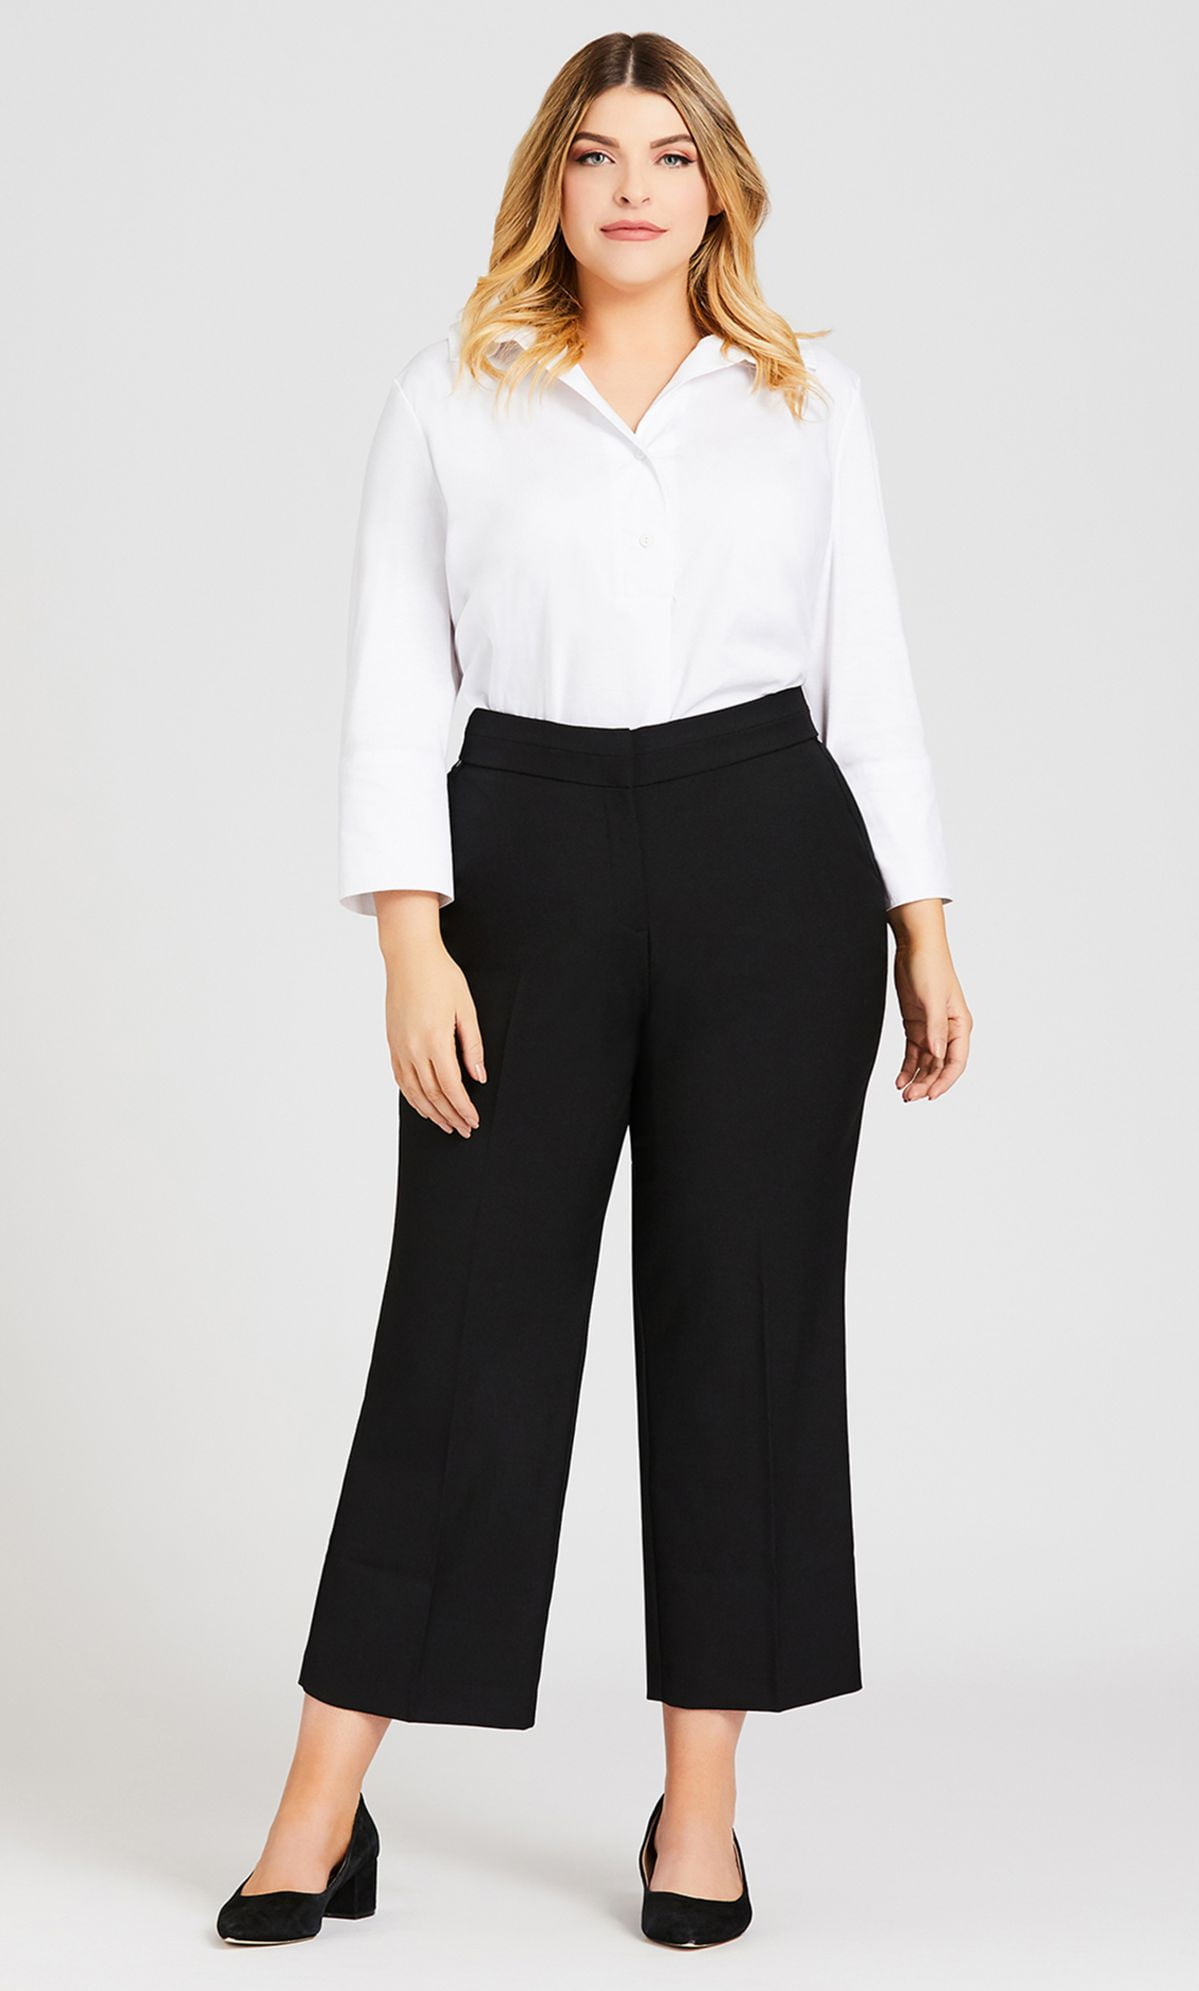 Plus Size Black Trouser Work Outfits - Alexa Webb